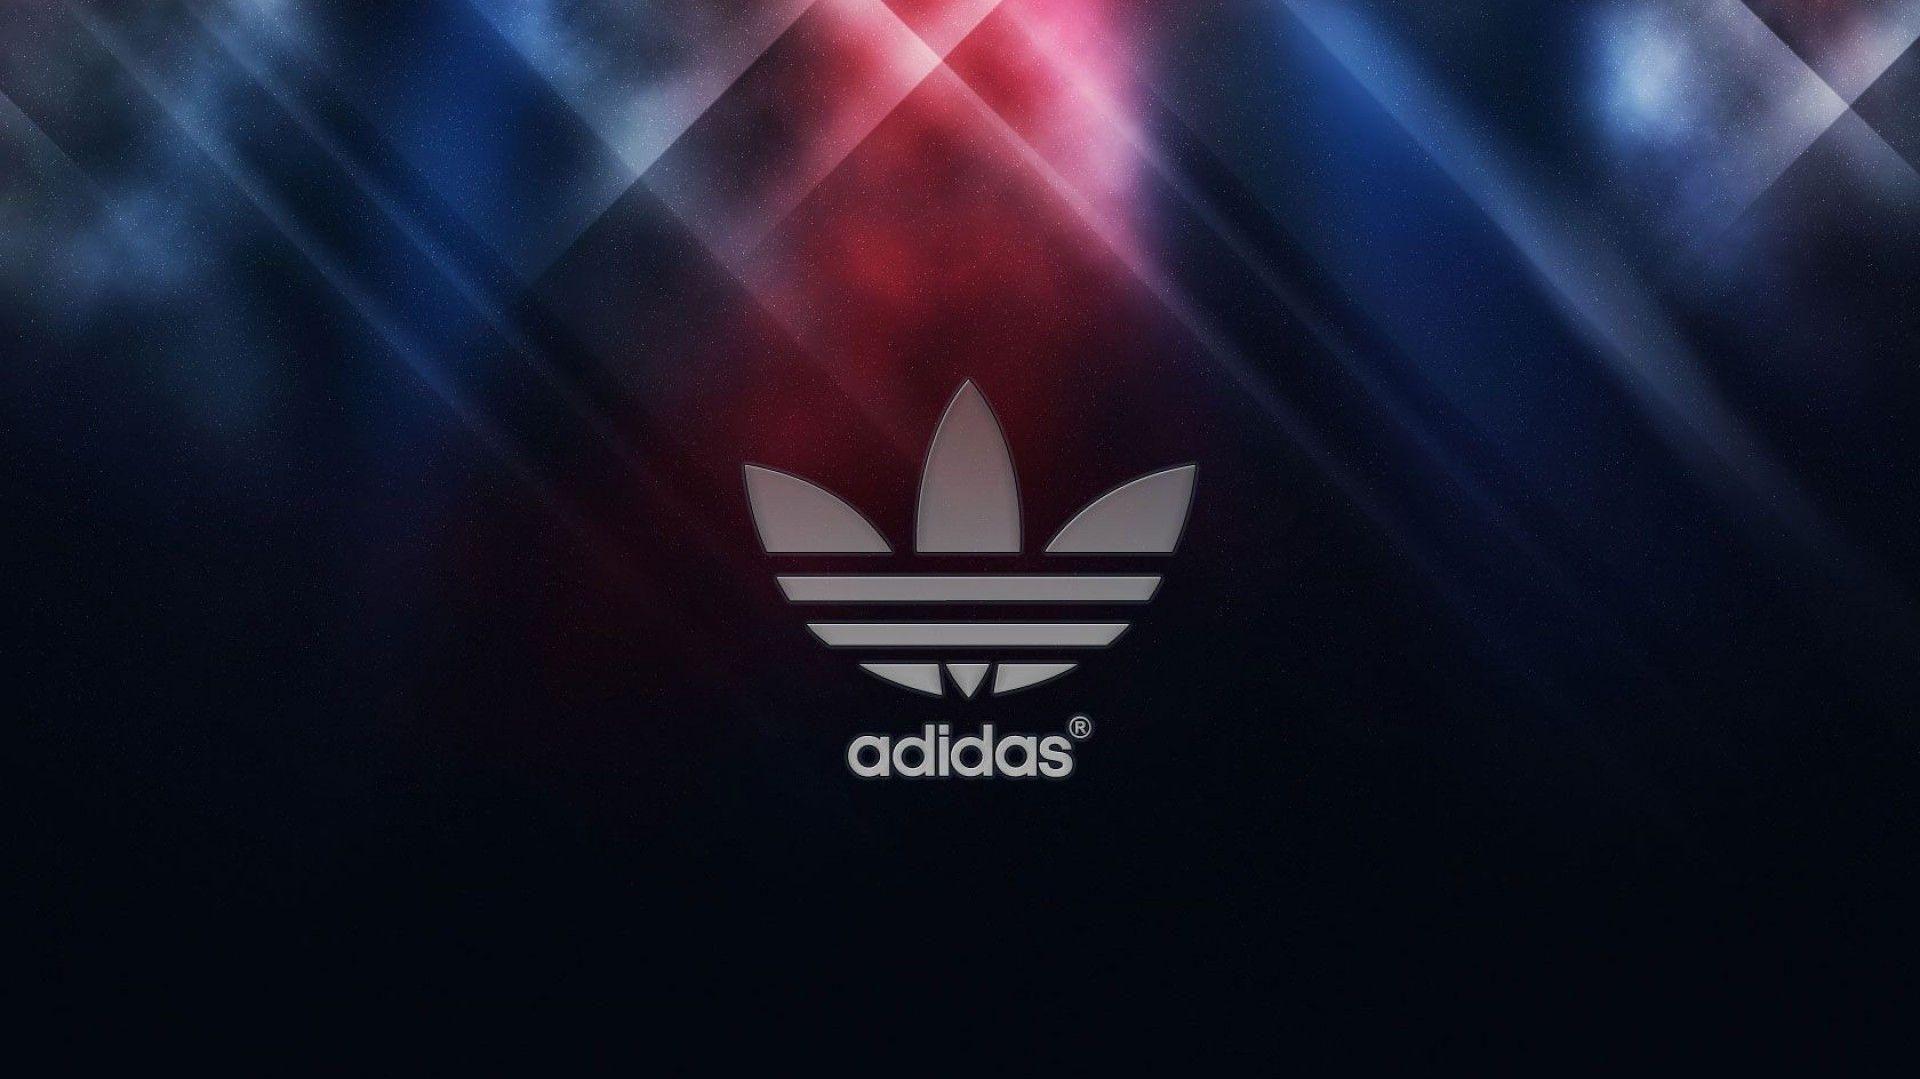 Adidas 4k Wallpaper Top Background